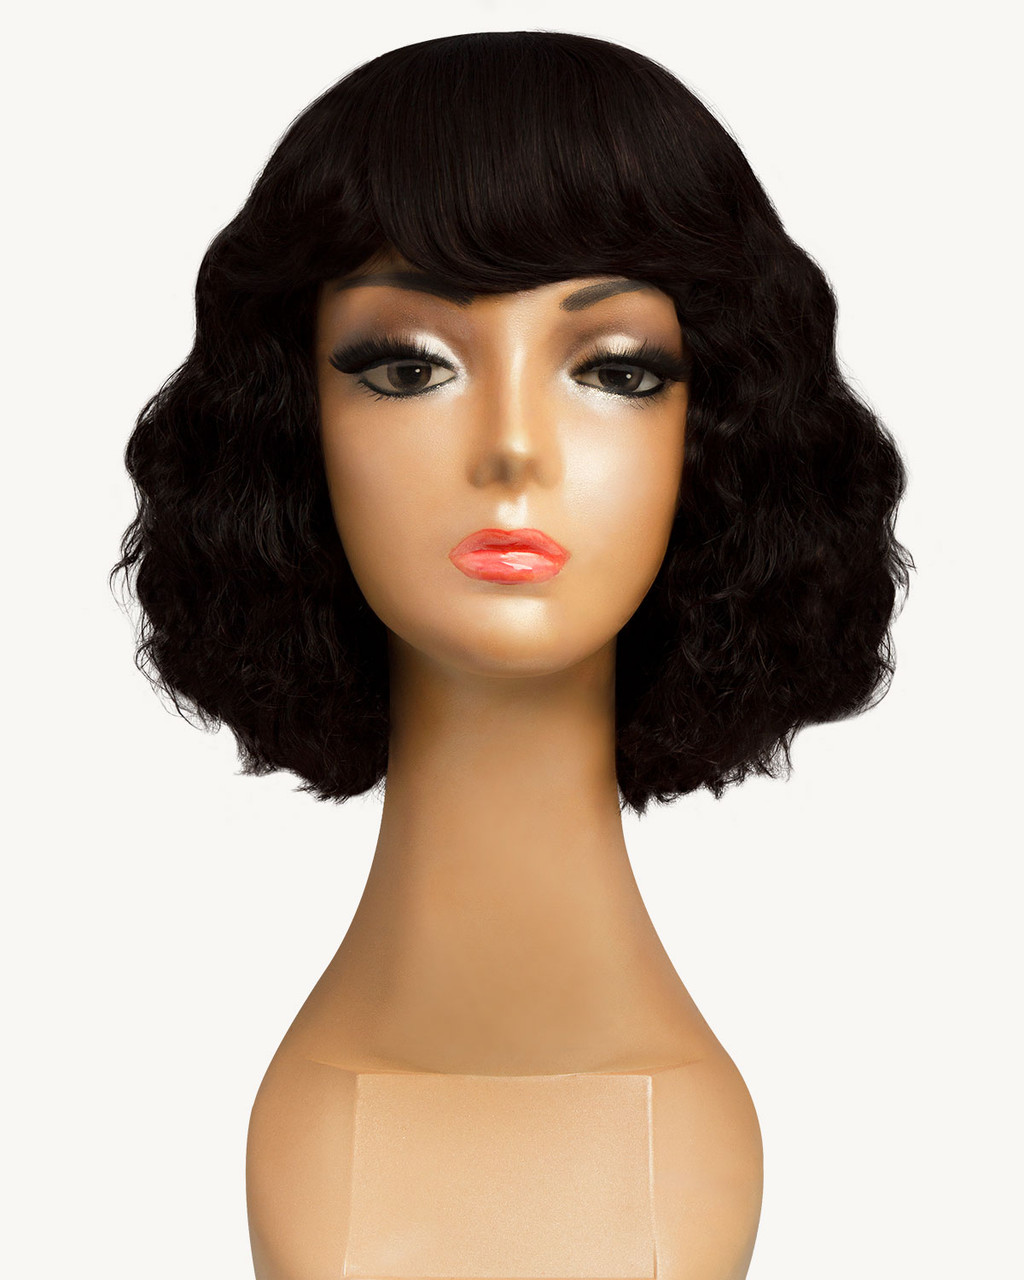 Bella Mannequin 100% human hair styling, 24 inch long hair